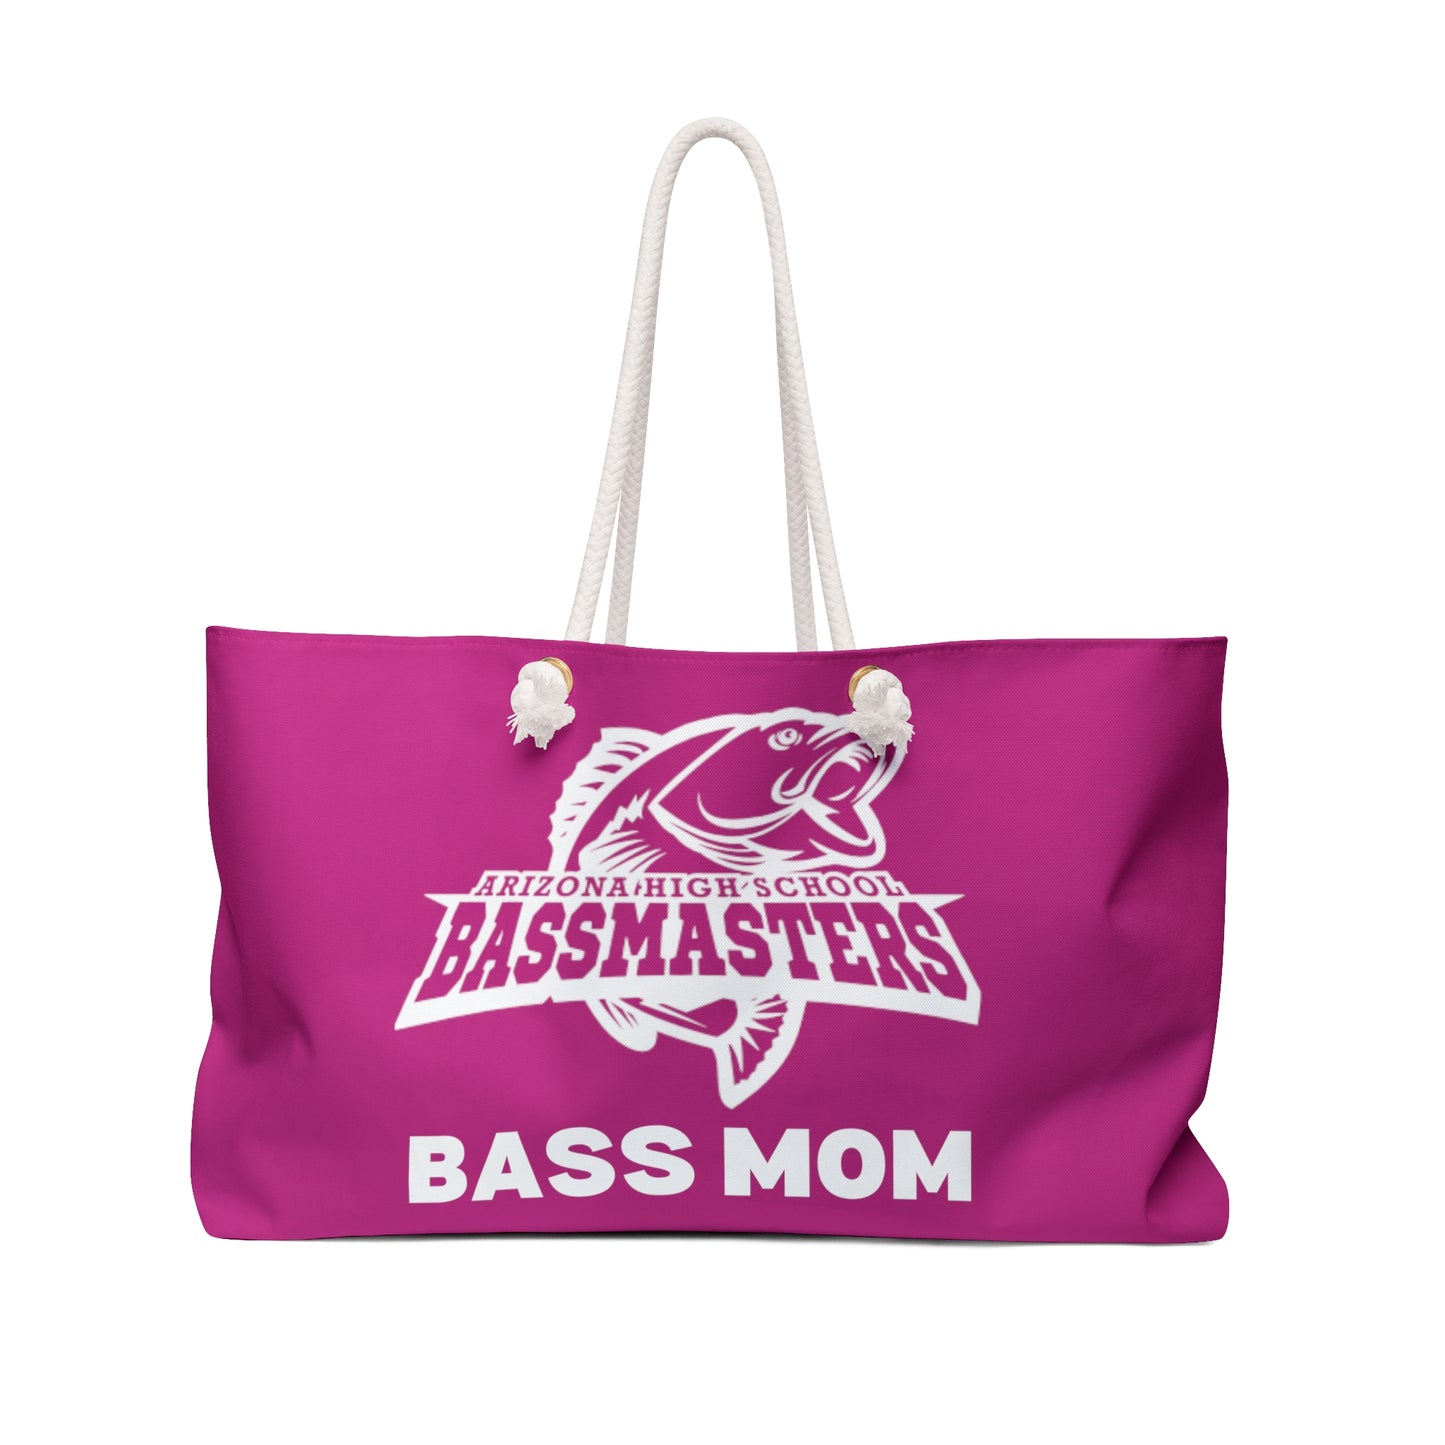 Junior Bassmasters High School - BASS MOM - Weekender Bag (Pink)